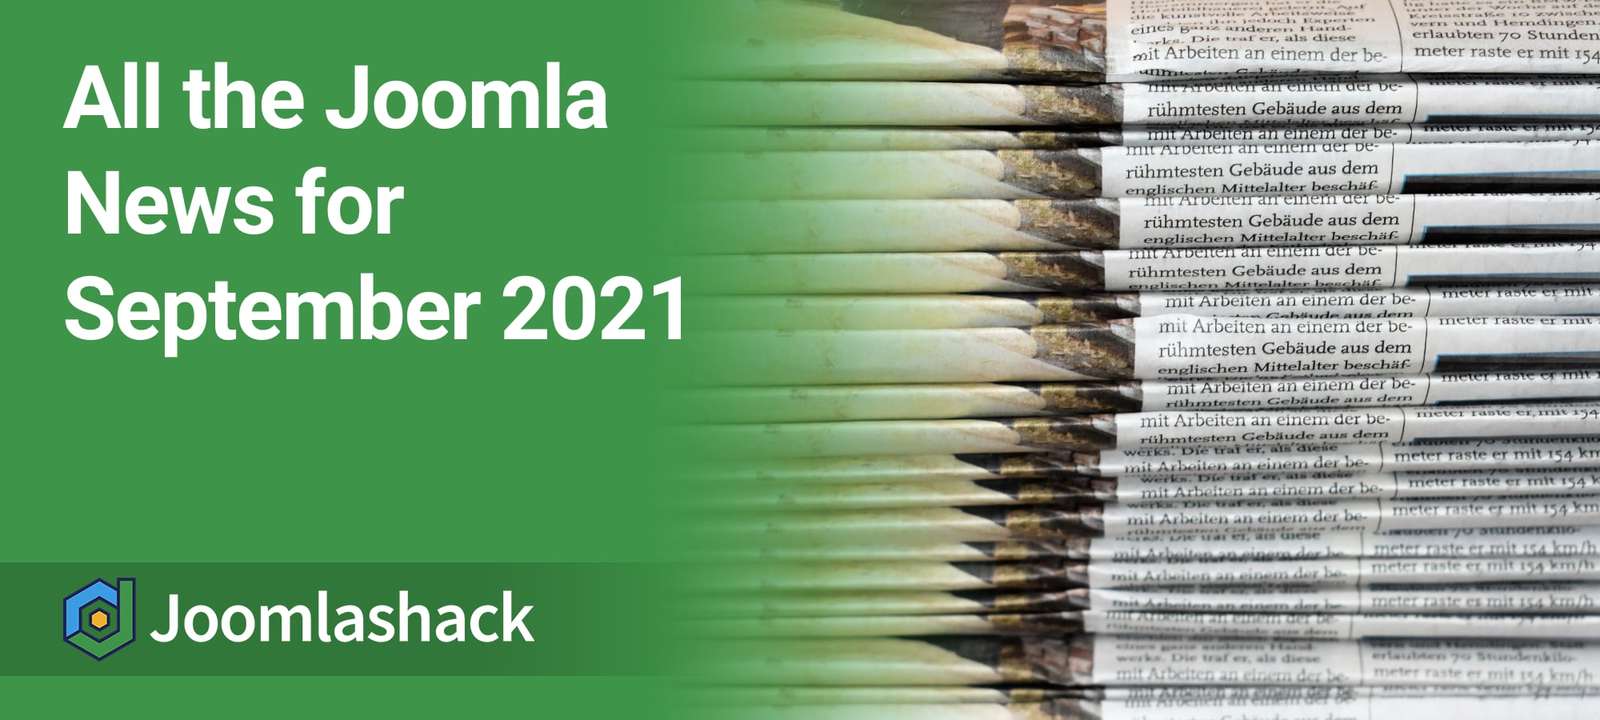 All the Joomla News for September 2021 